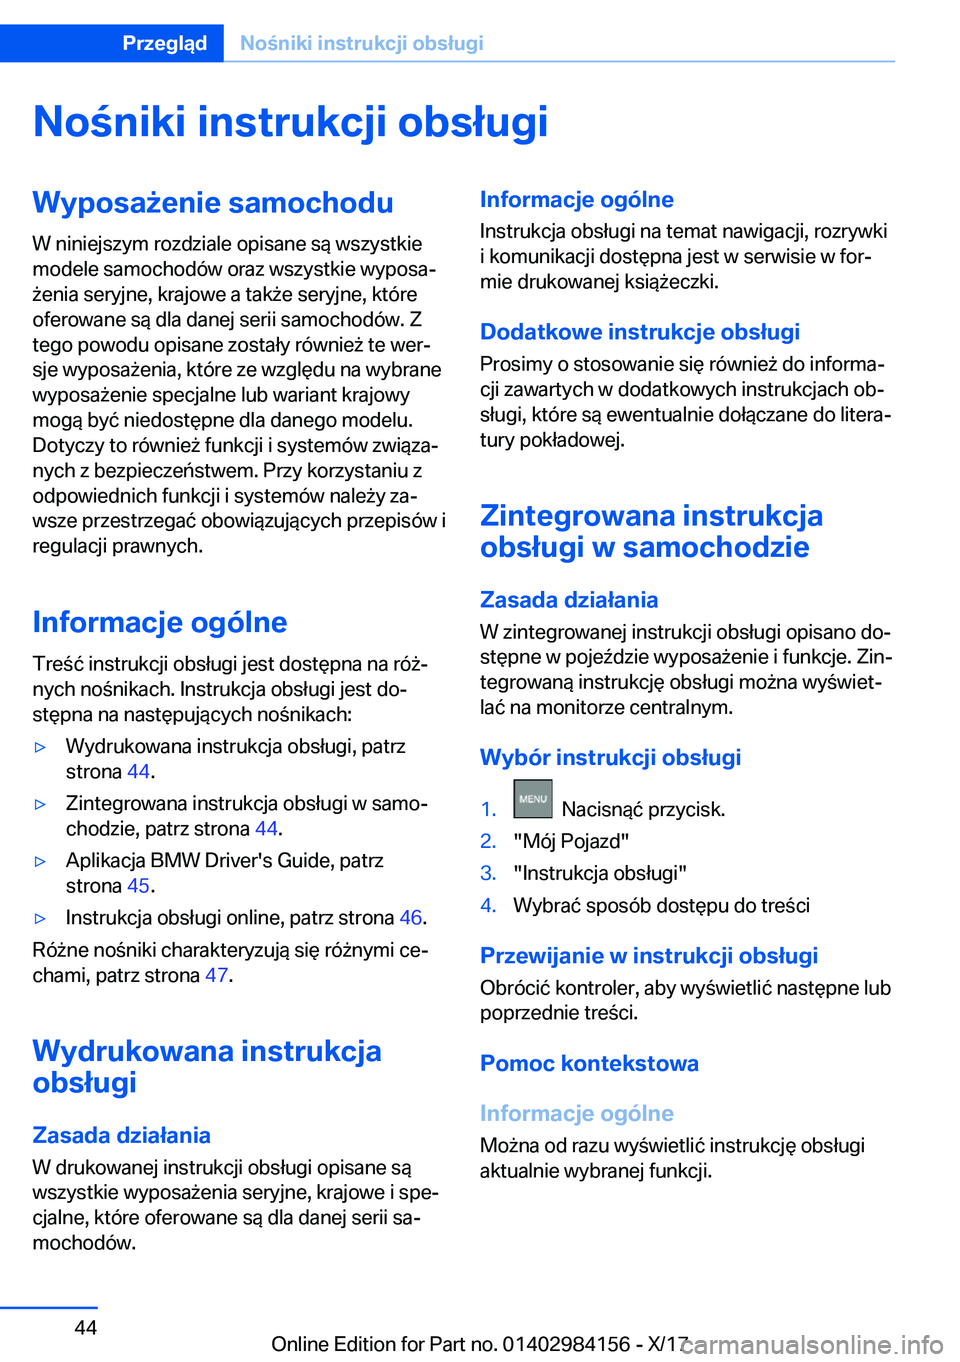 BMW 2 SERIES COUPE 2018  Instrukcja obsługi (in Polish) �N�o�n�i�k�i��i�n�s�t�r�u�k�c�j�i��o�b�s�ł�u�g�i�W�y�p�o�s�a9�e�n�i�e��s�a�m�o�c�h�o�d�u
�W� �n�i�n�i�e�j�s�z�y�m� �r�o�z�d�z�i�a�l�e� �o�p�i�s�a�n�e� �s�